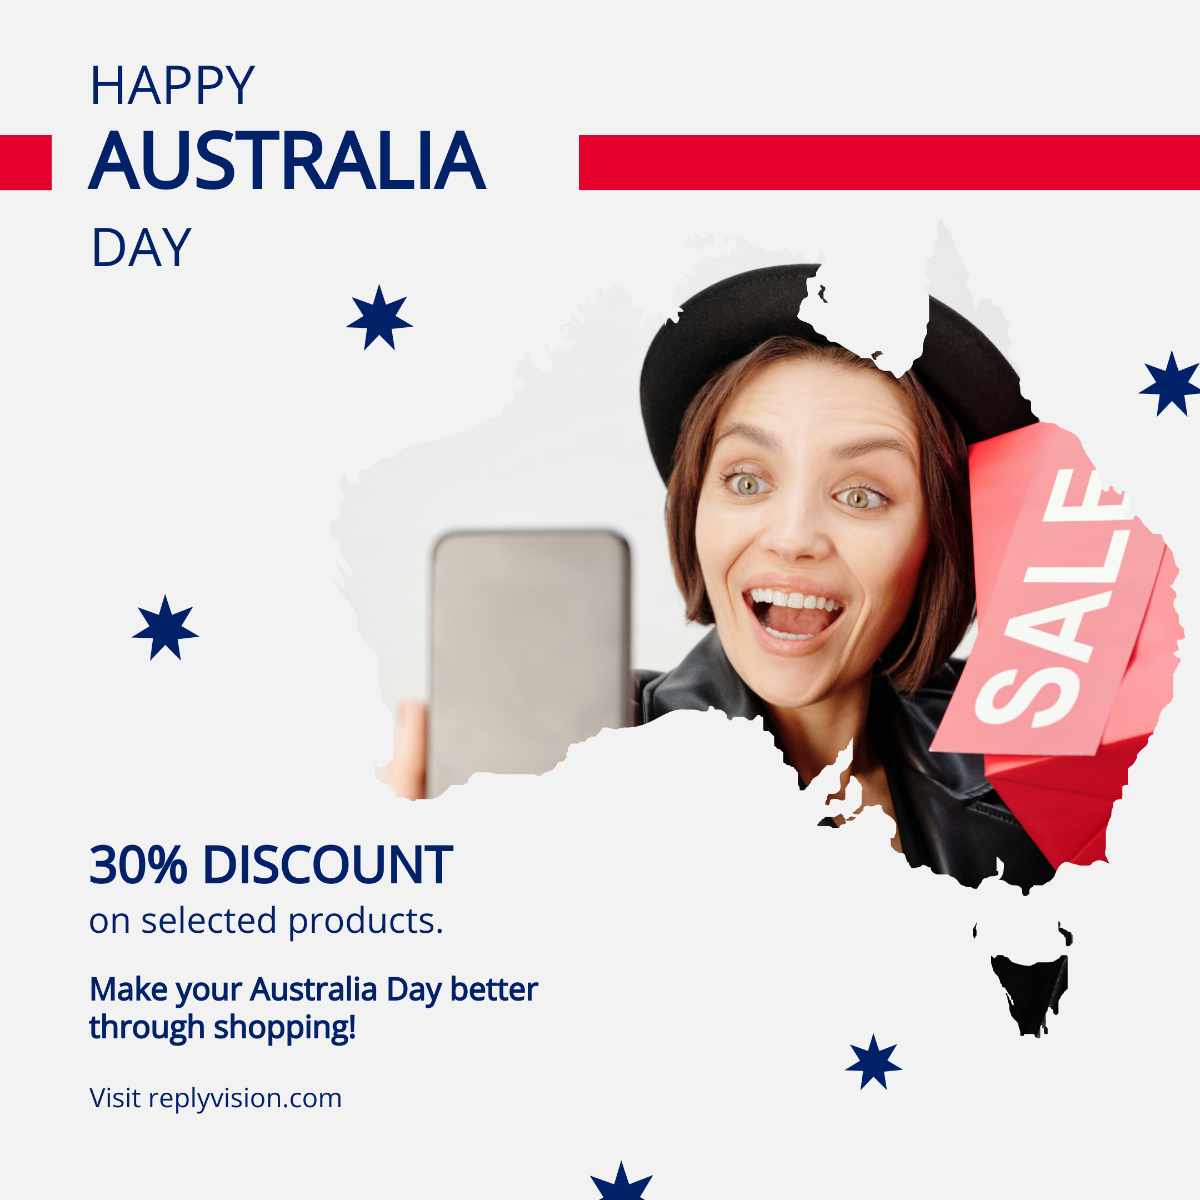 Free Happy Australia Day Instagram Post Template